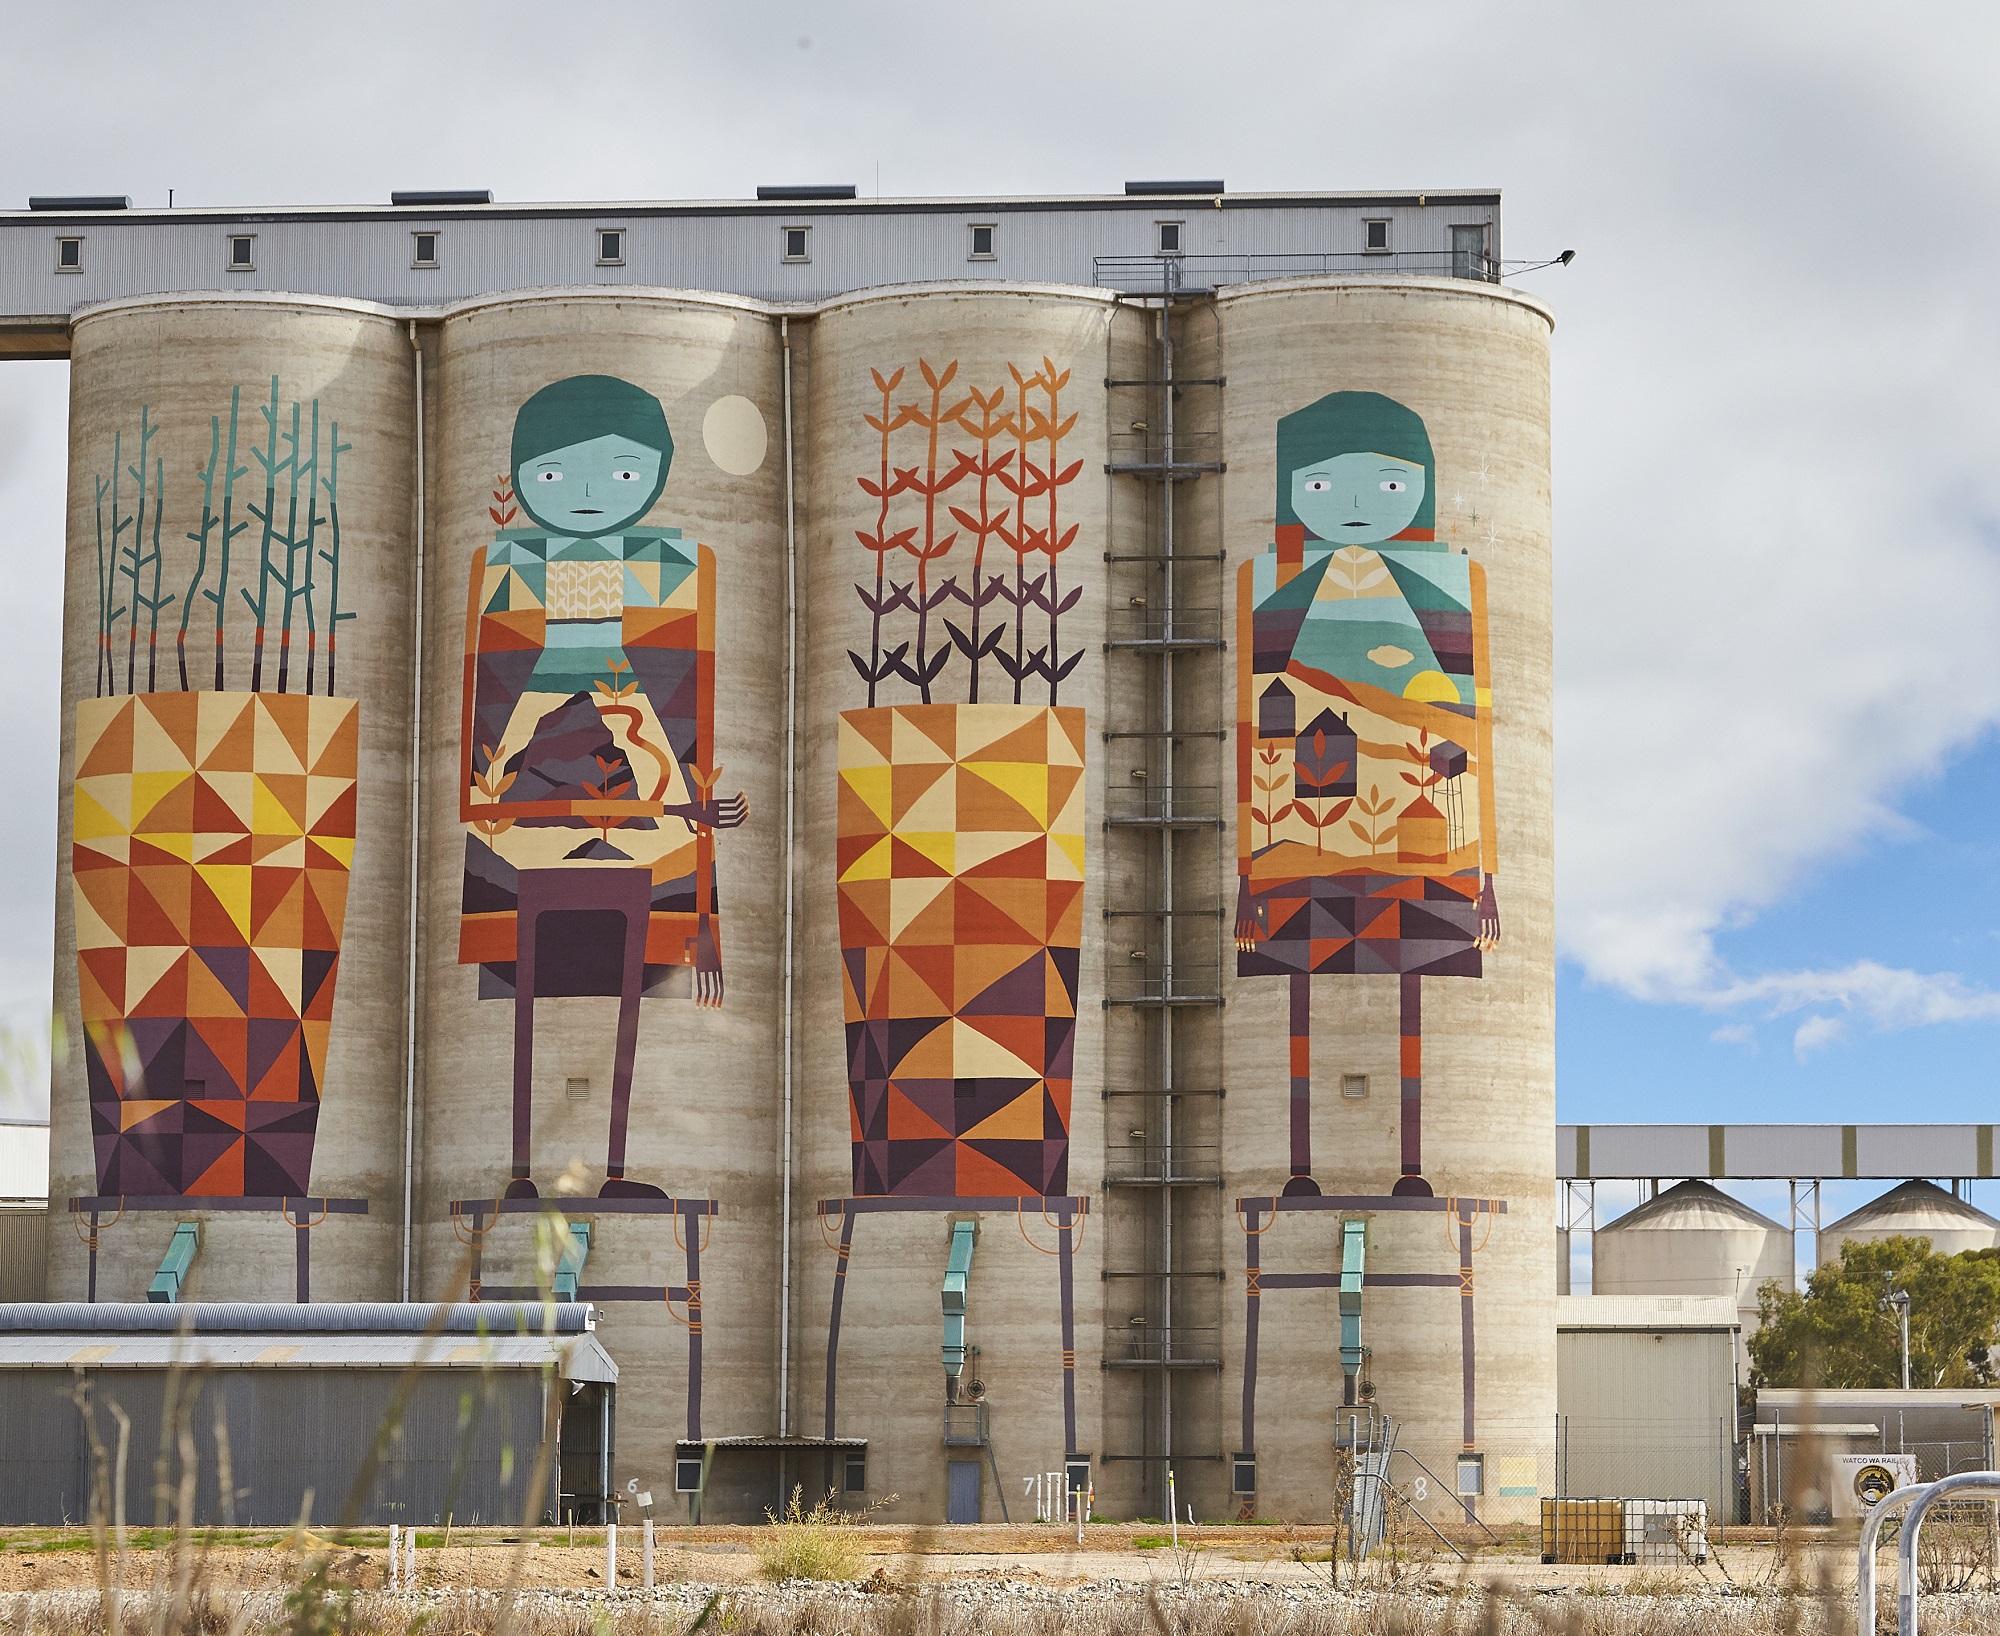 A photo of the silo artwork at the Merredin receival site